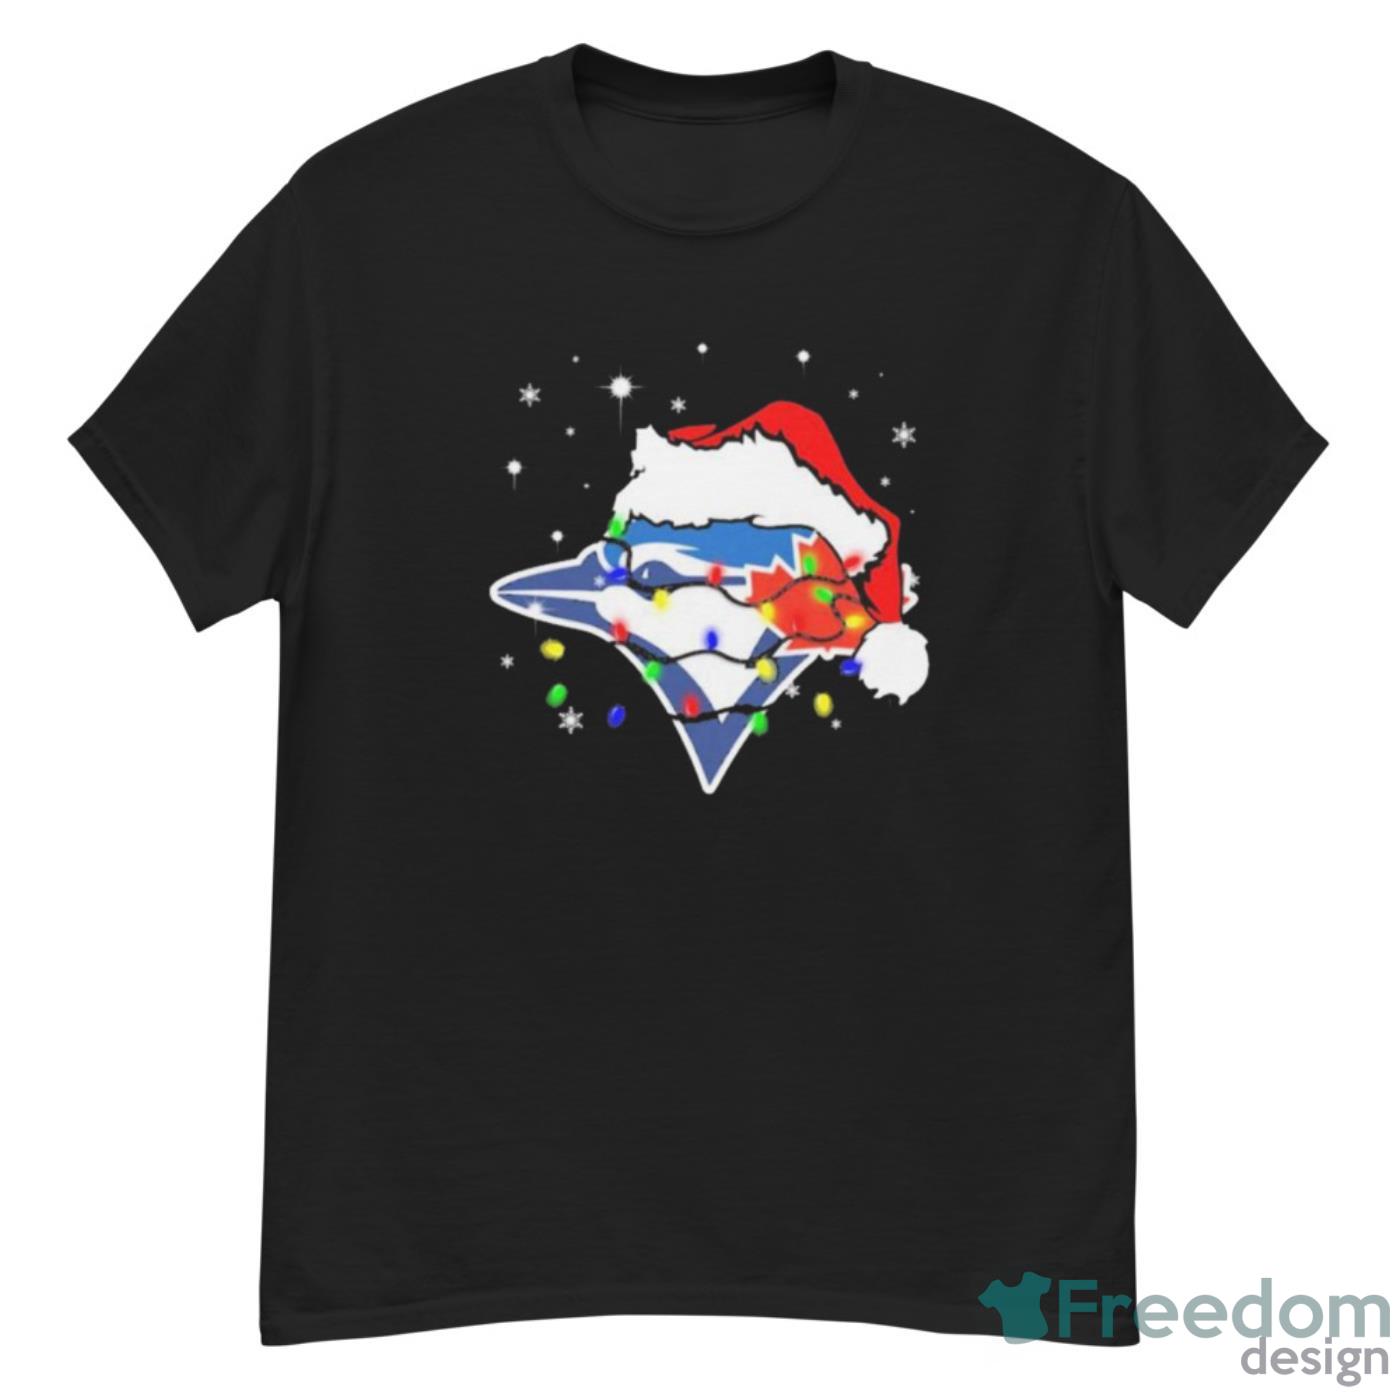 Santa Hat Texas Rangers Light Christmas Shirt - Freedomdesign